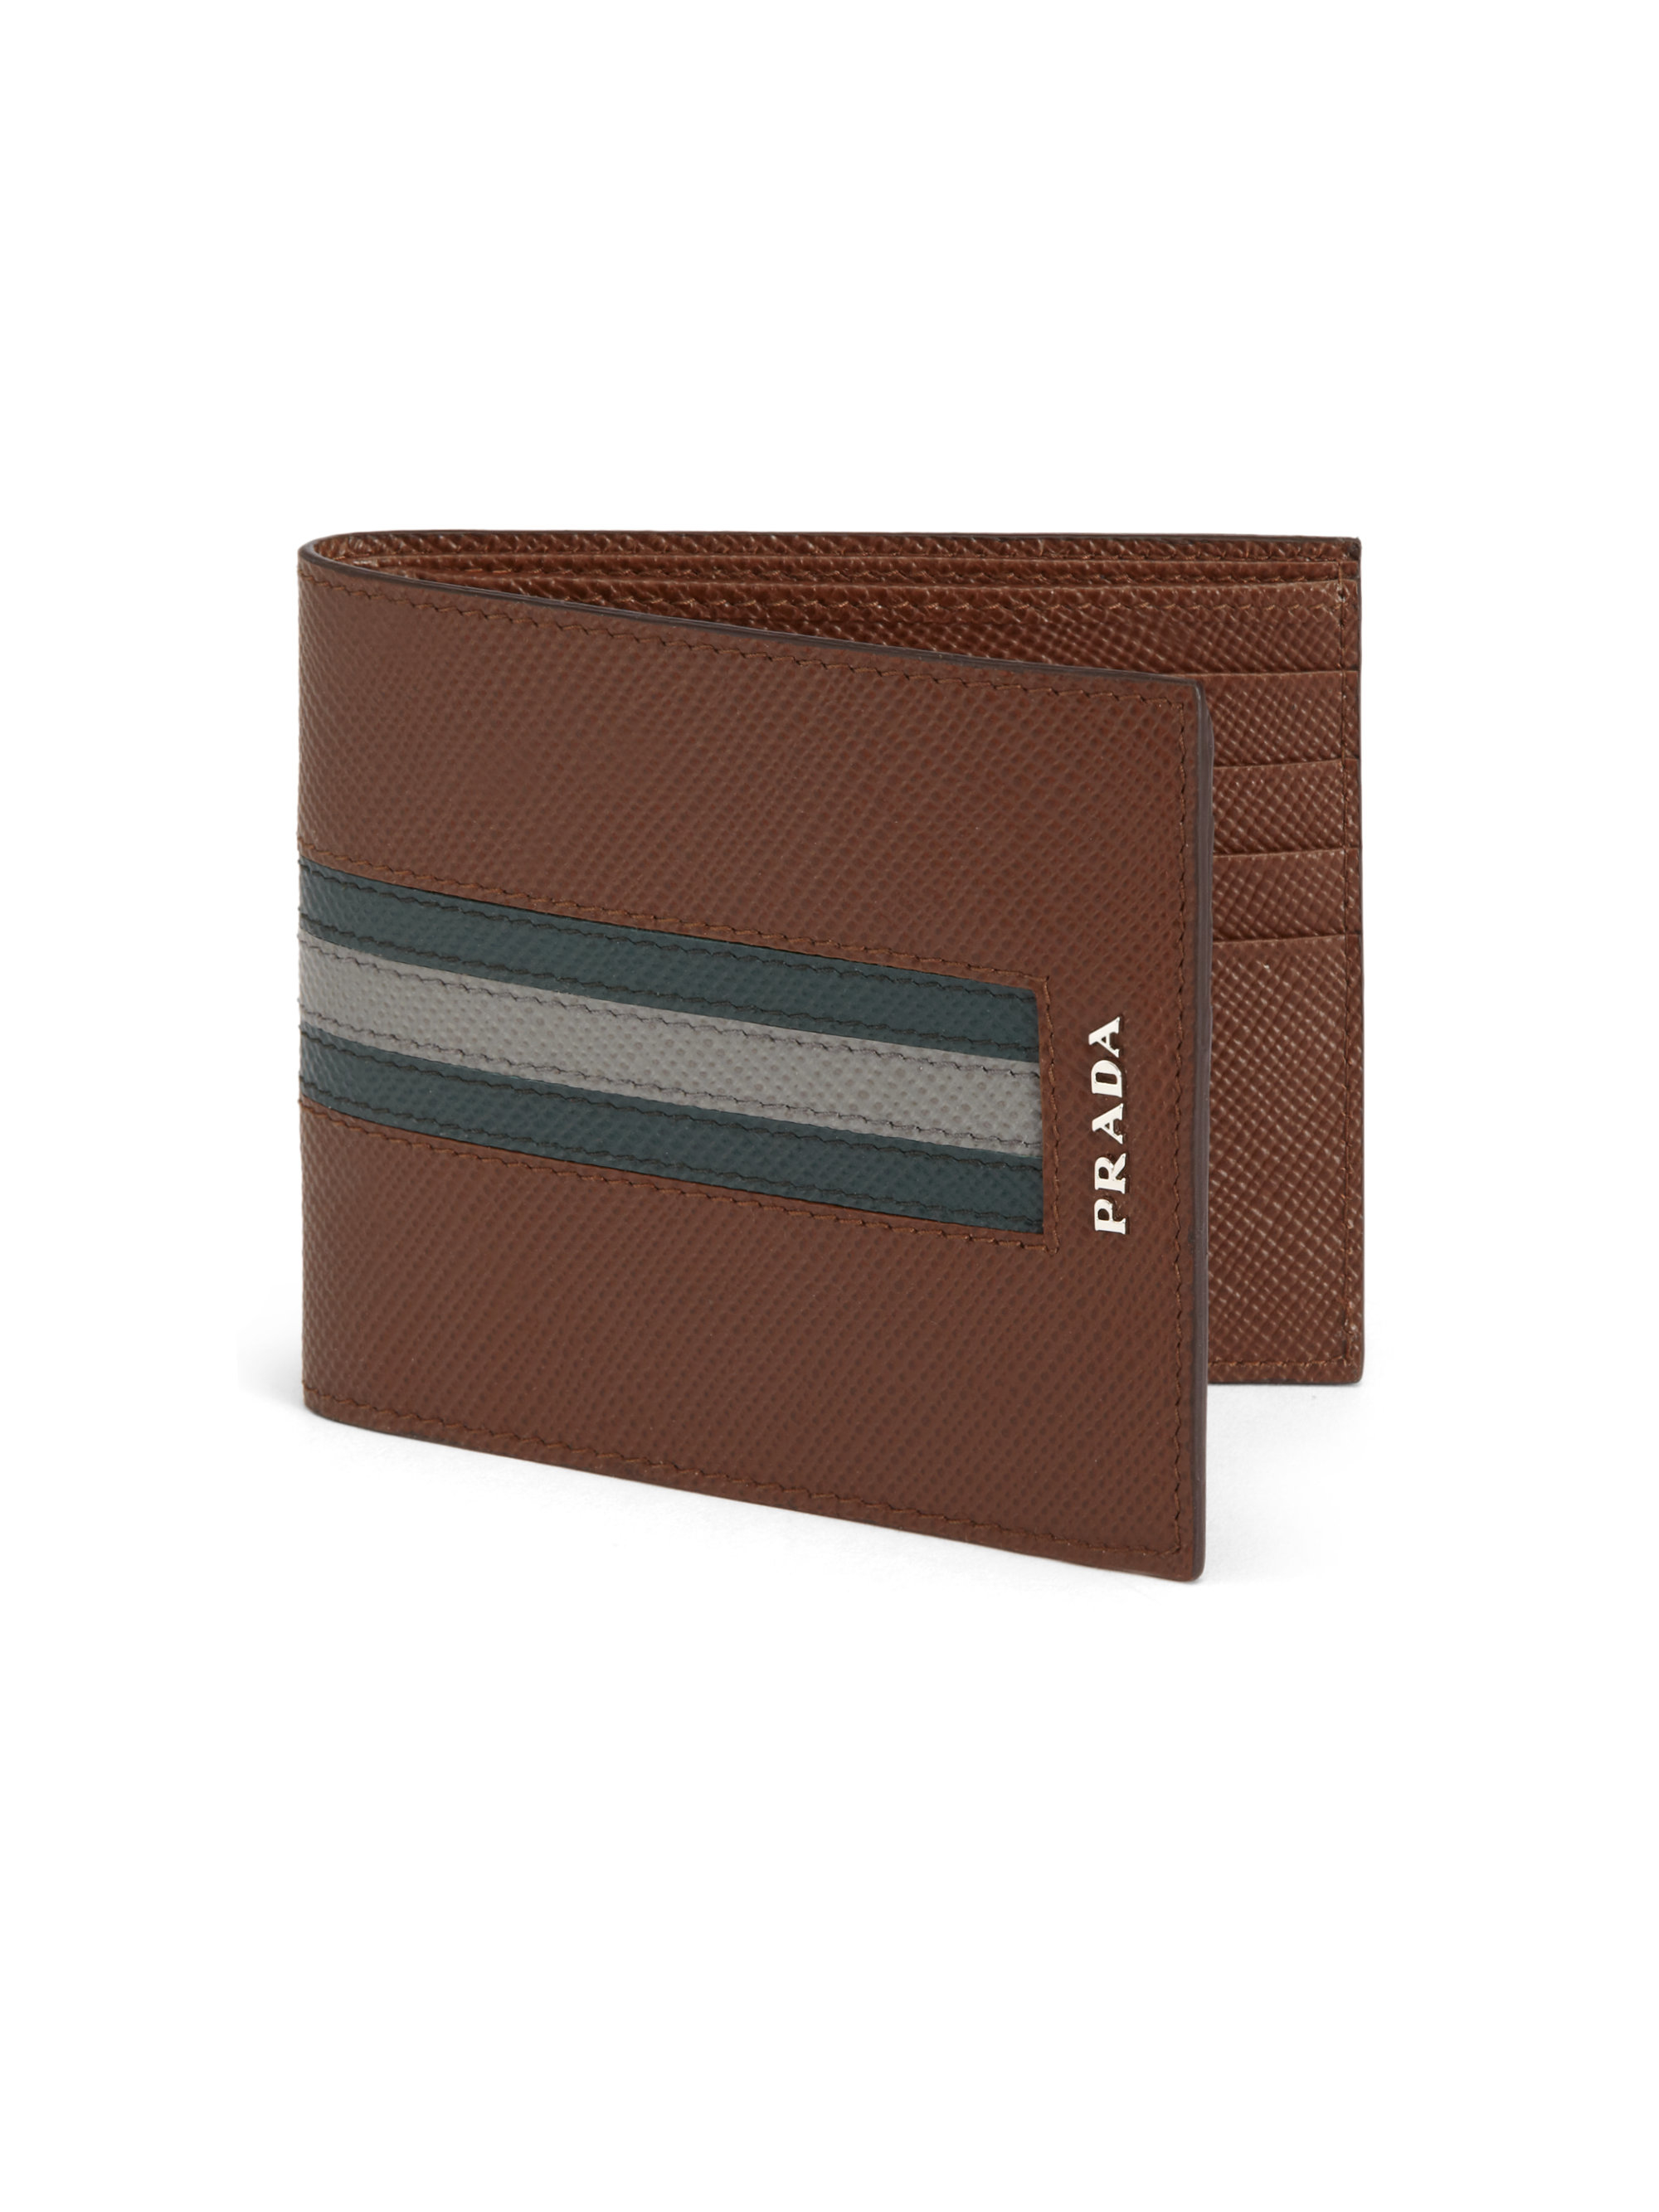 Lyst - Prada Saffiano Cuir Striped Bifold Wallet in Brown for Men